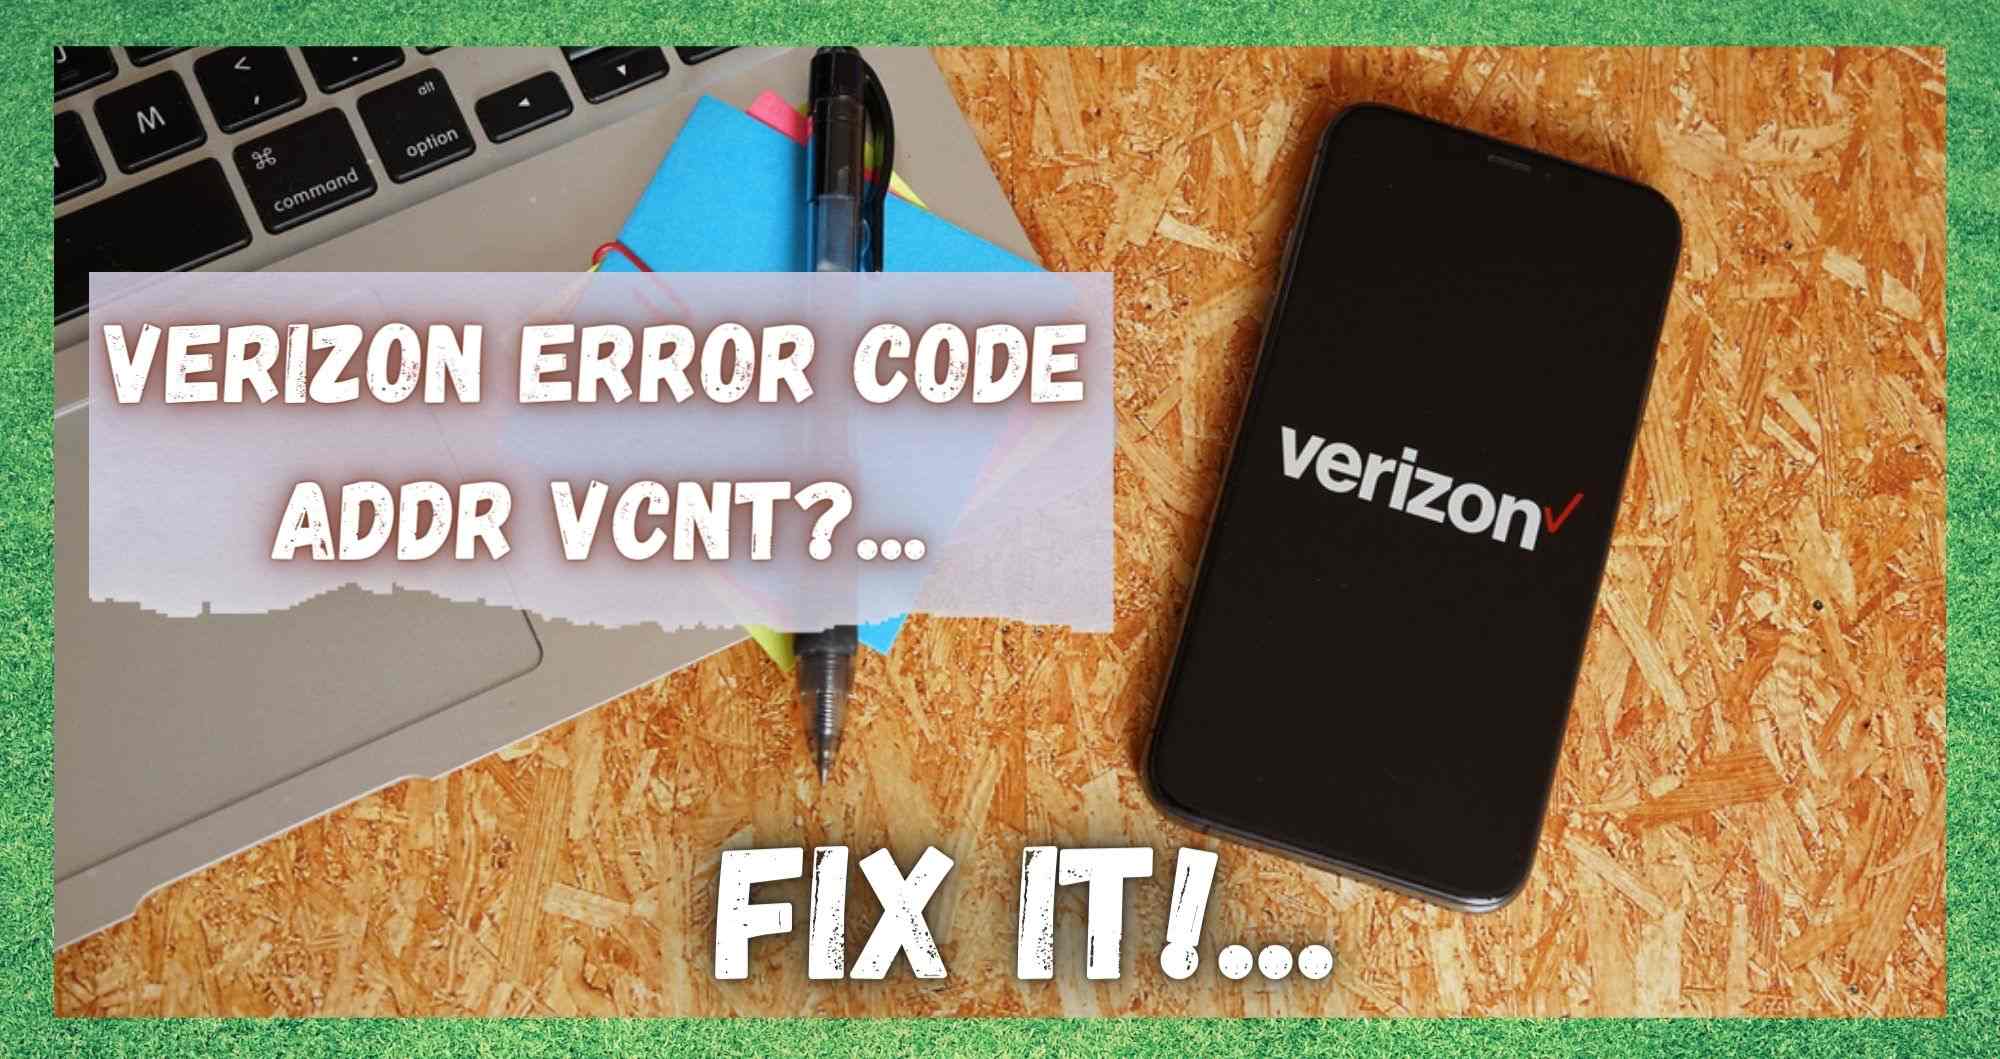 Verizon Error Code ADDR VCNT